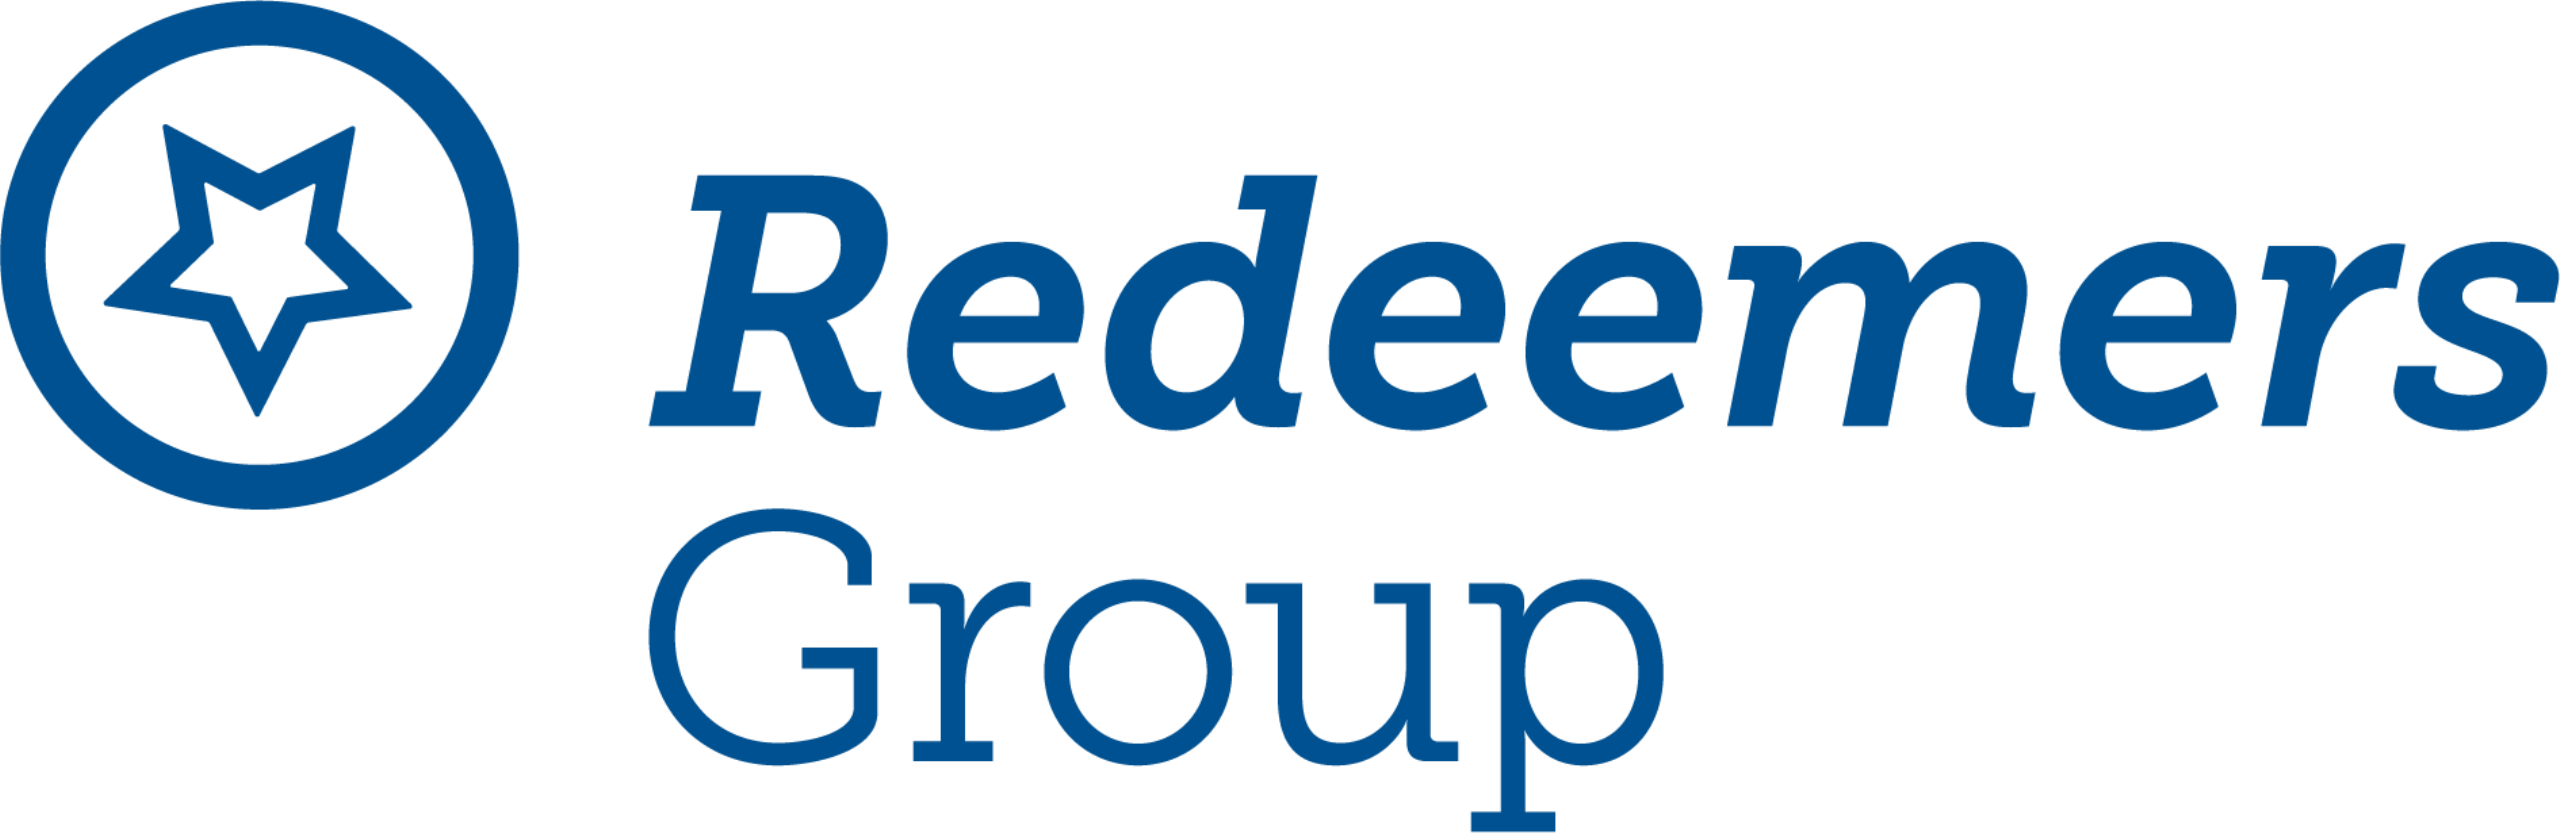 Redeemers Group, Inc. Logo